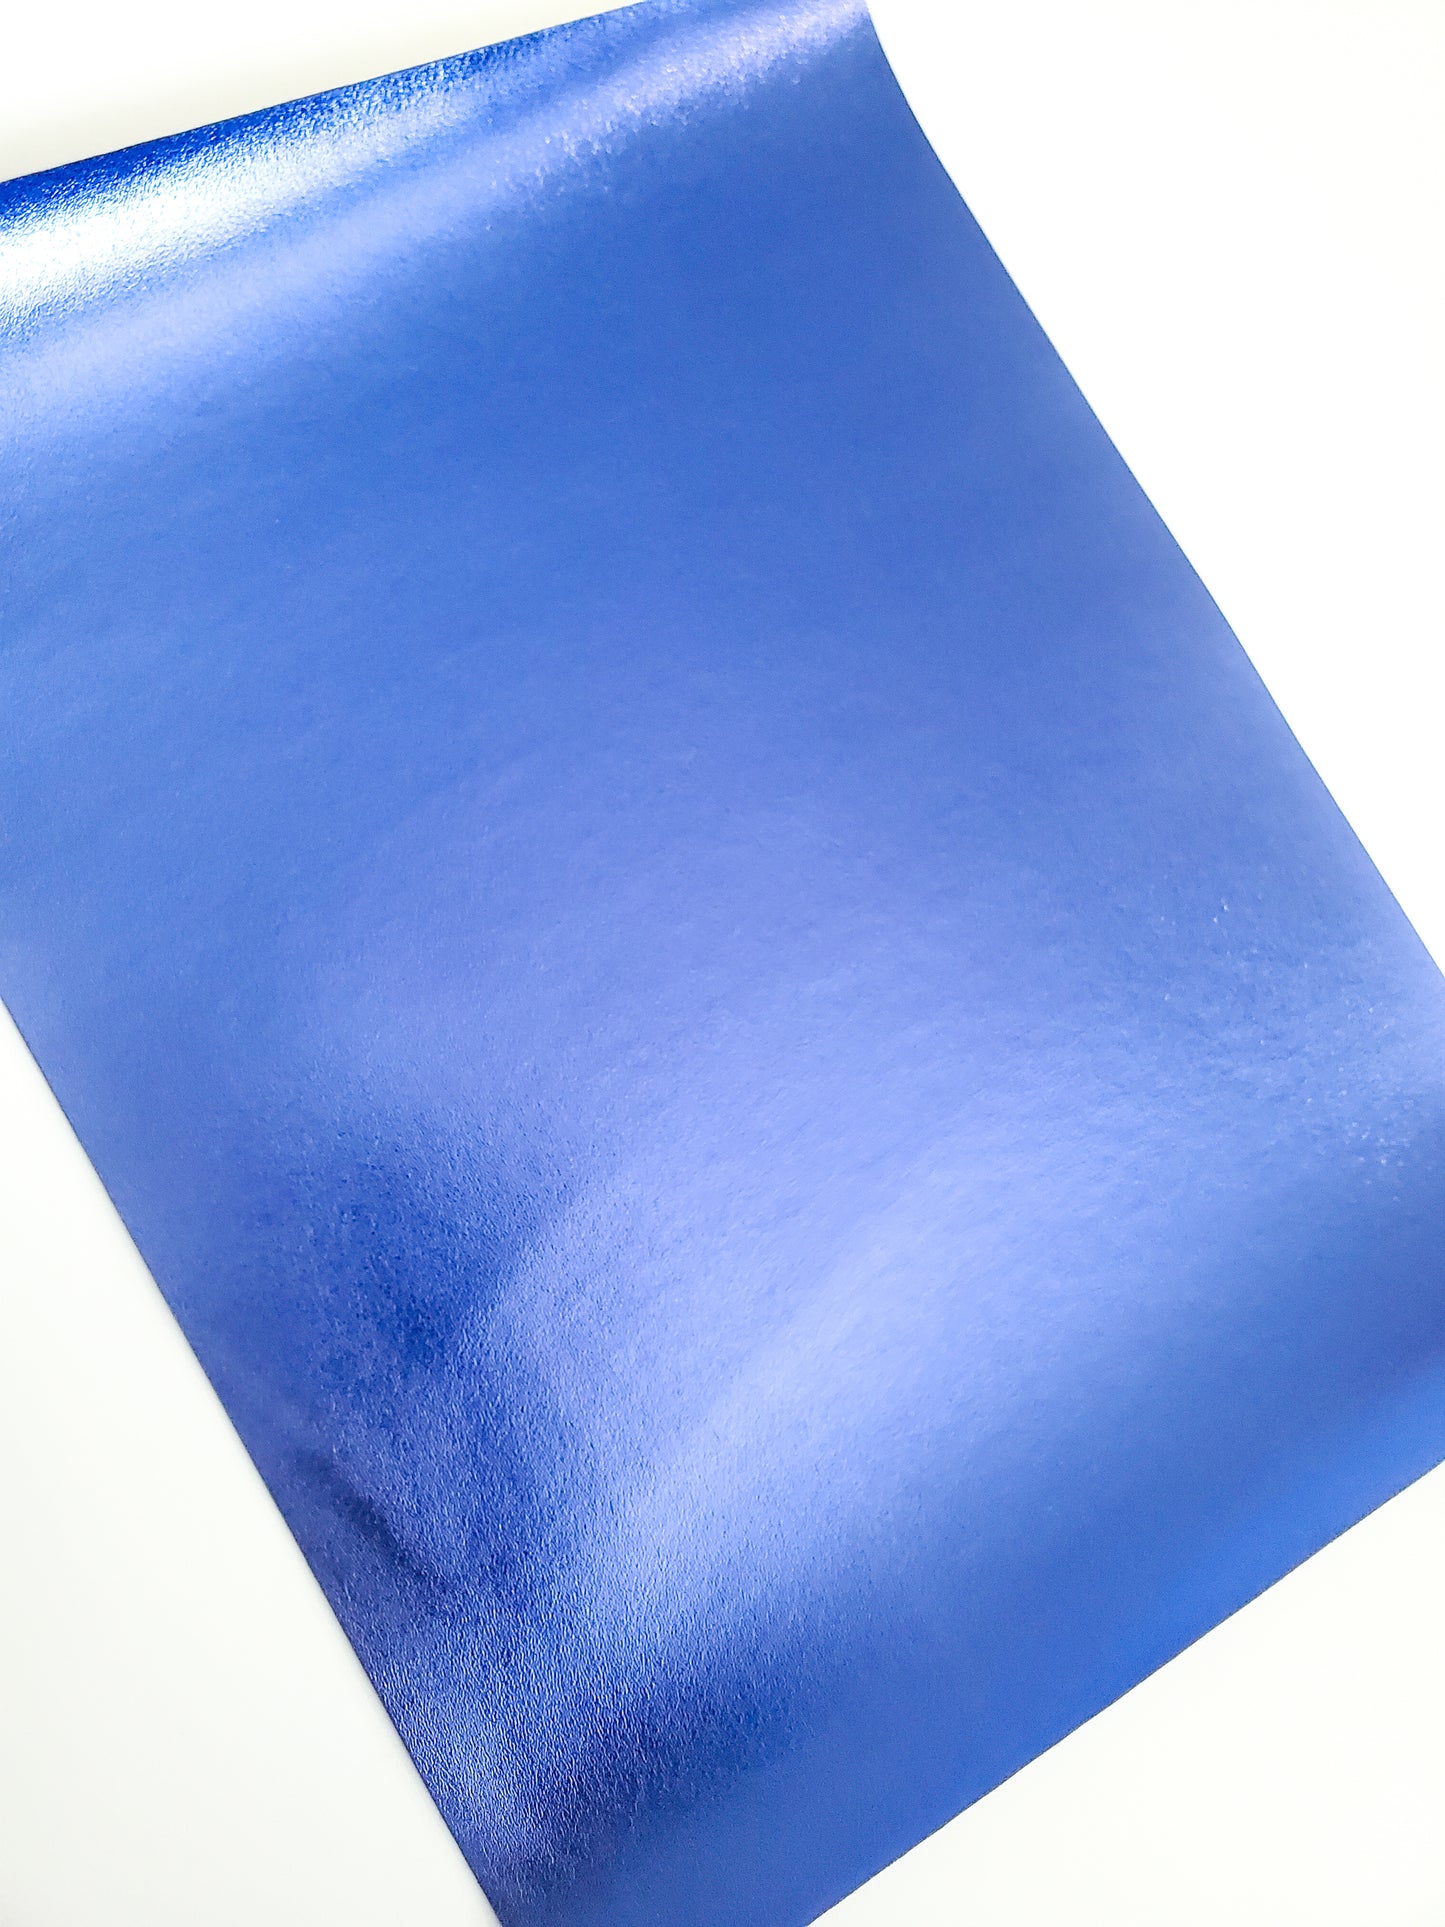 Metallic Blue Smooth 9x12 faux leather sheet